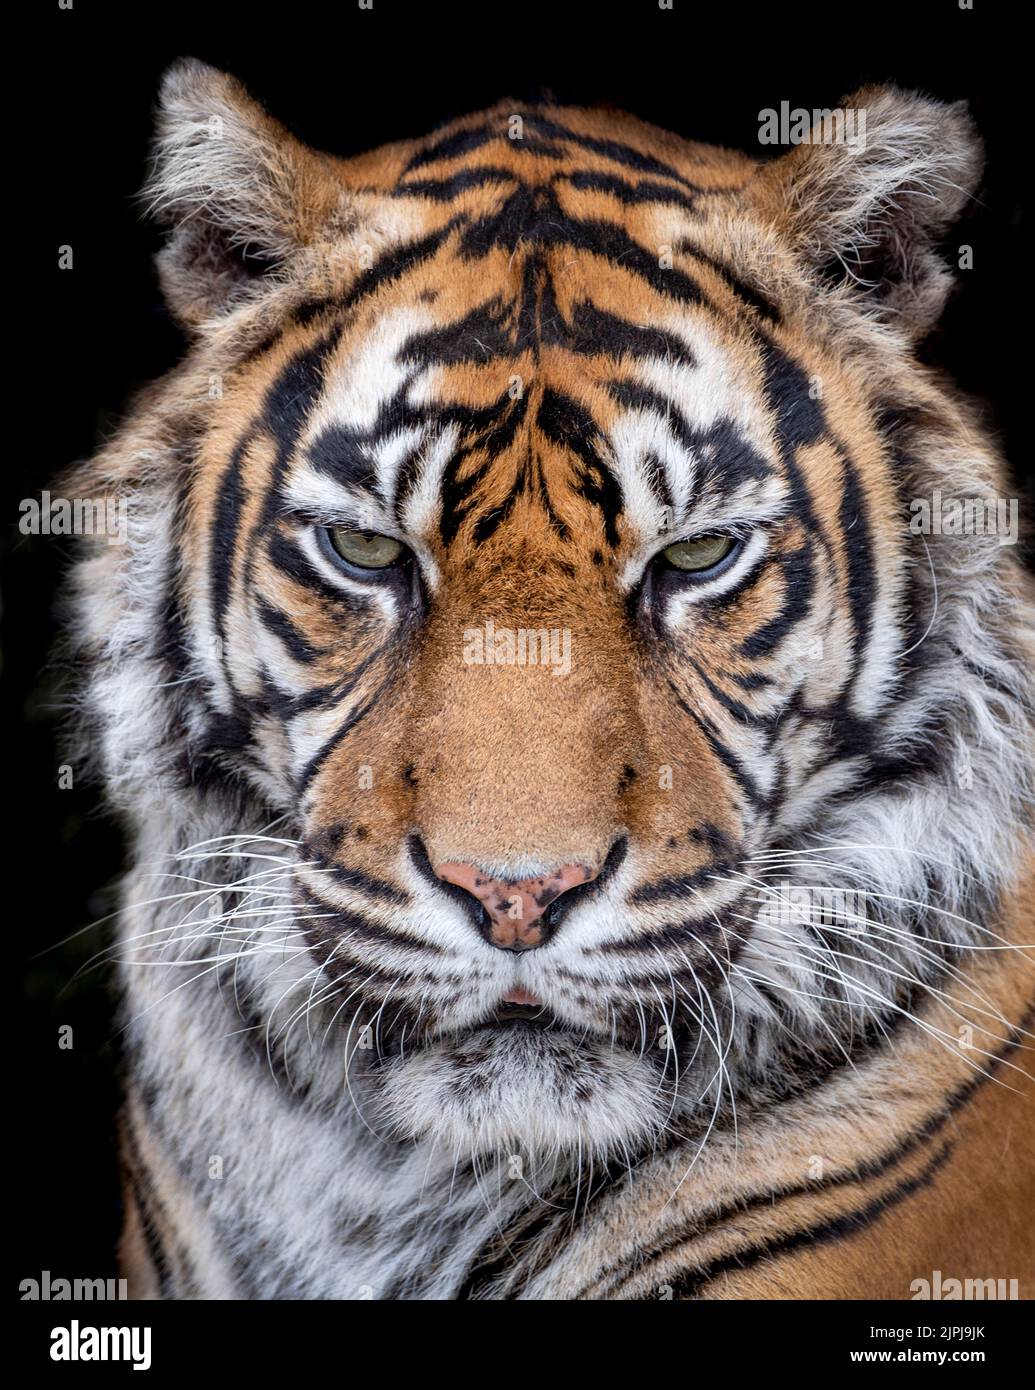 Female Sumatran tiger (close-up) Stock Photo